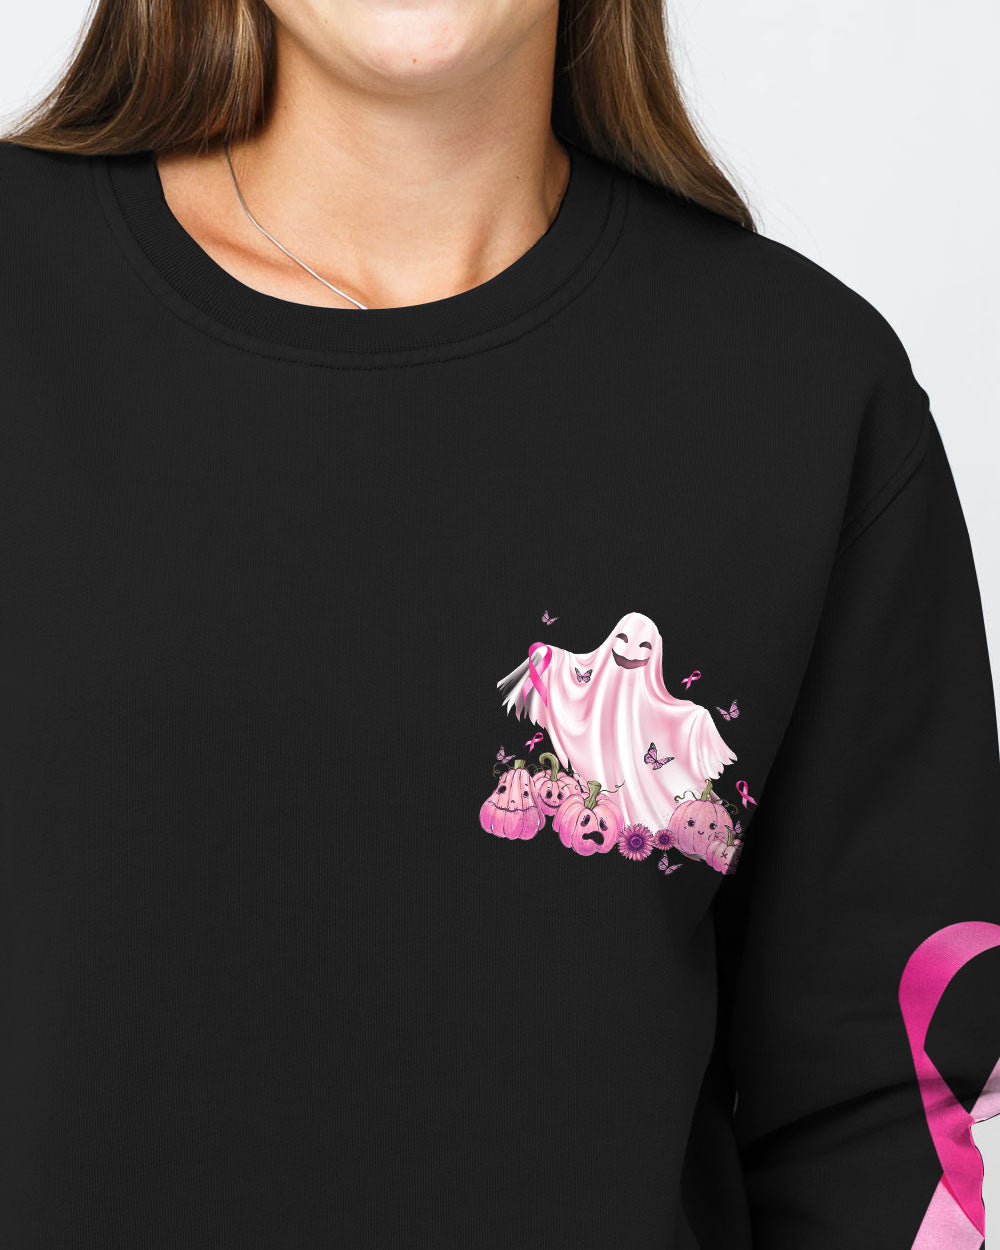 No One Fights Alone Boo Halloween Women's Breast Cancer Awareness Sweatshirt